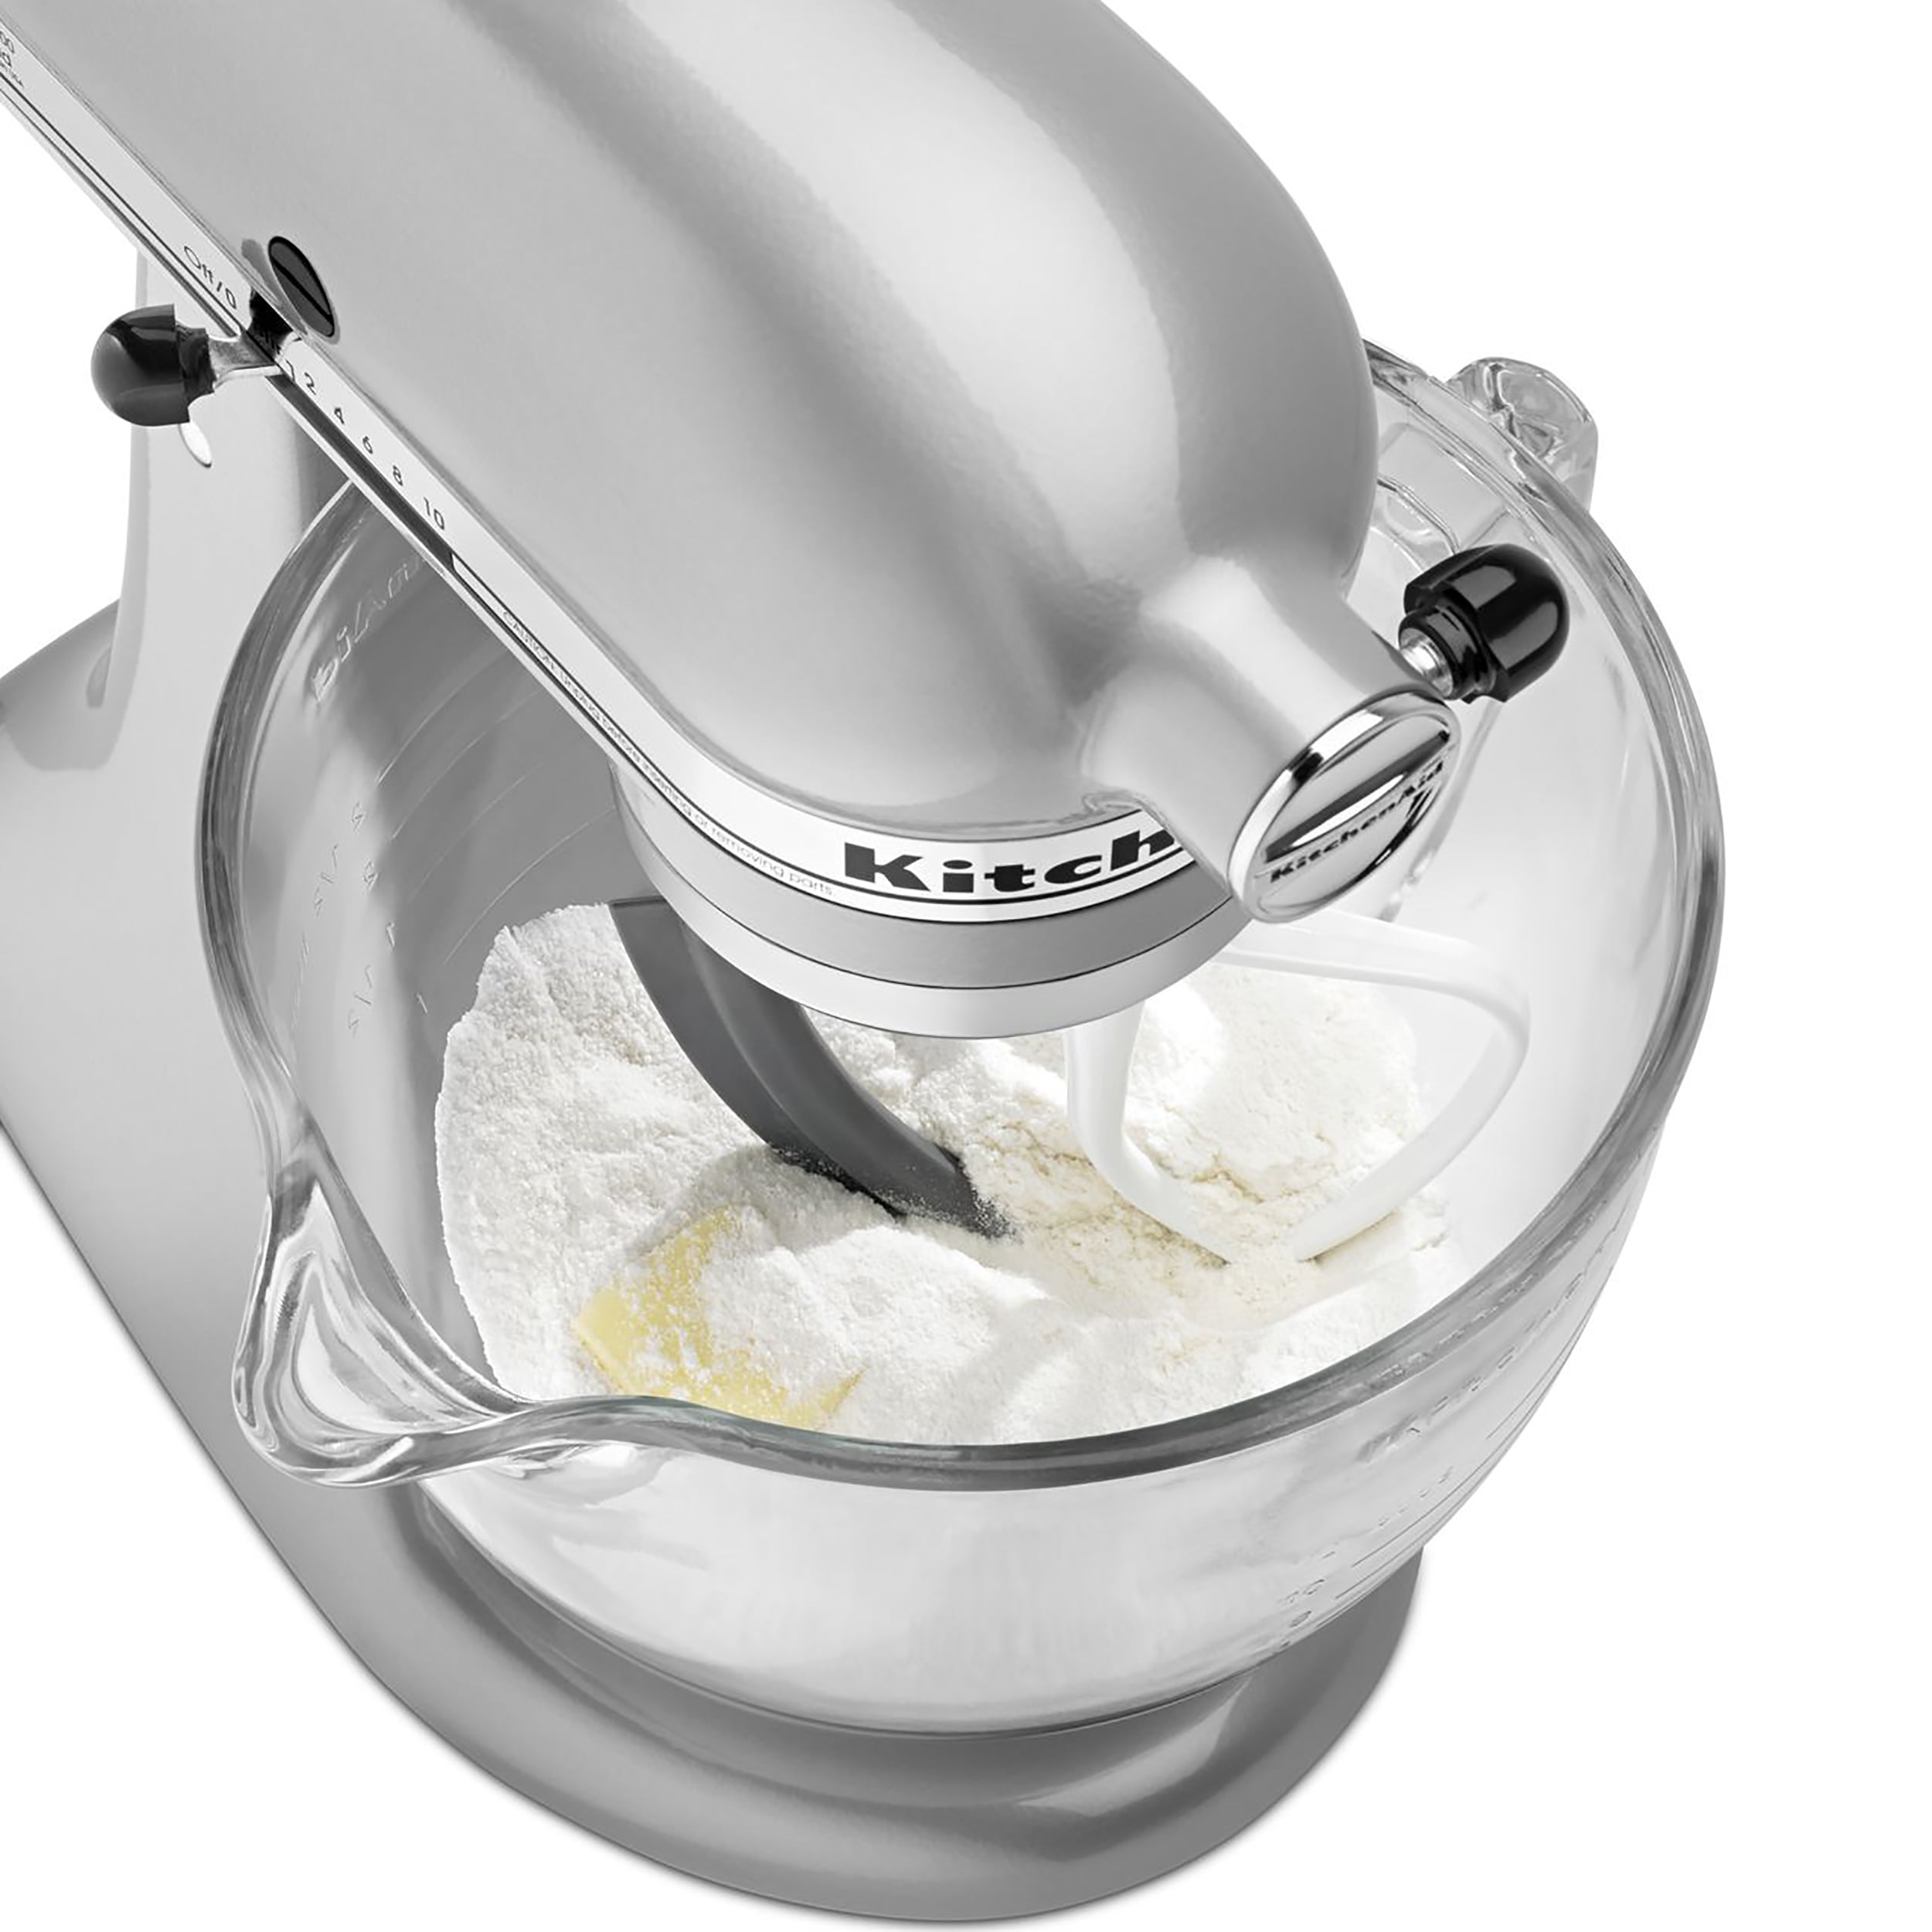 KitchenAid 5qt Glass Bowl Tilt-Head Stand Mixer with Flex Edge Beater  $259.99 Shipped